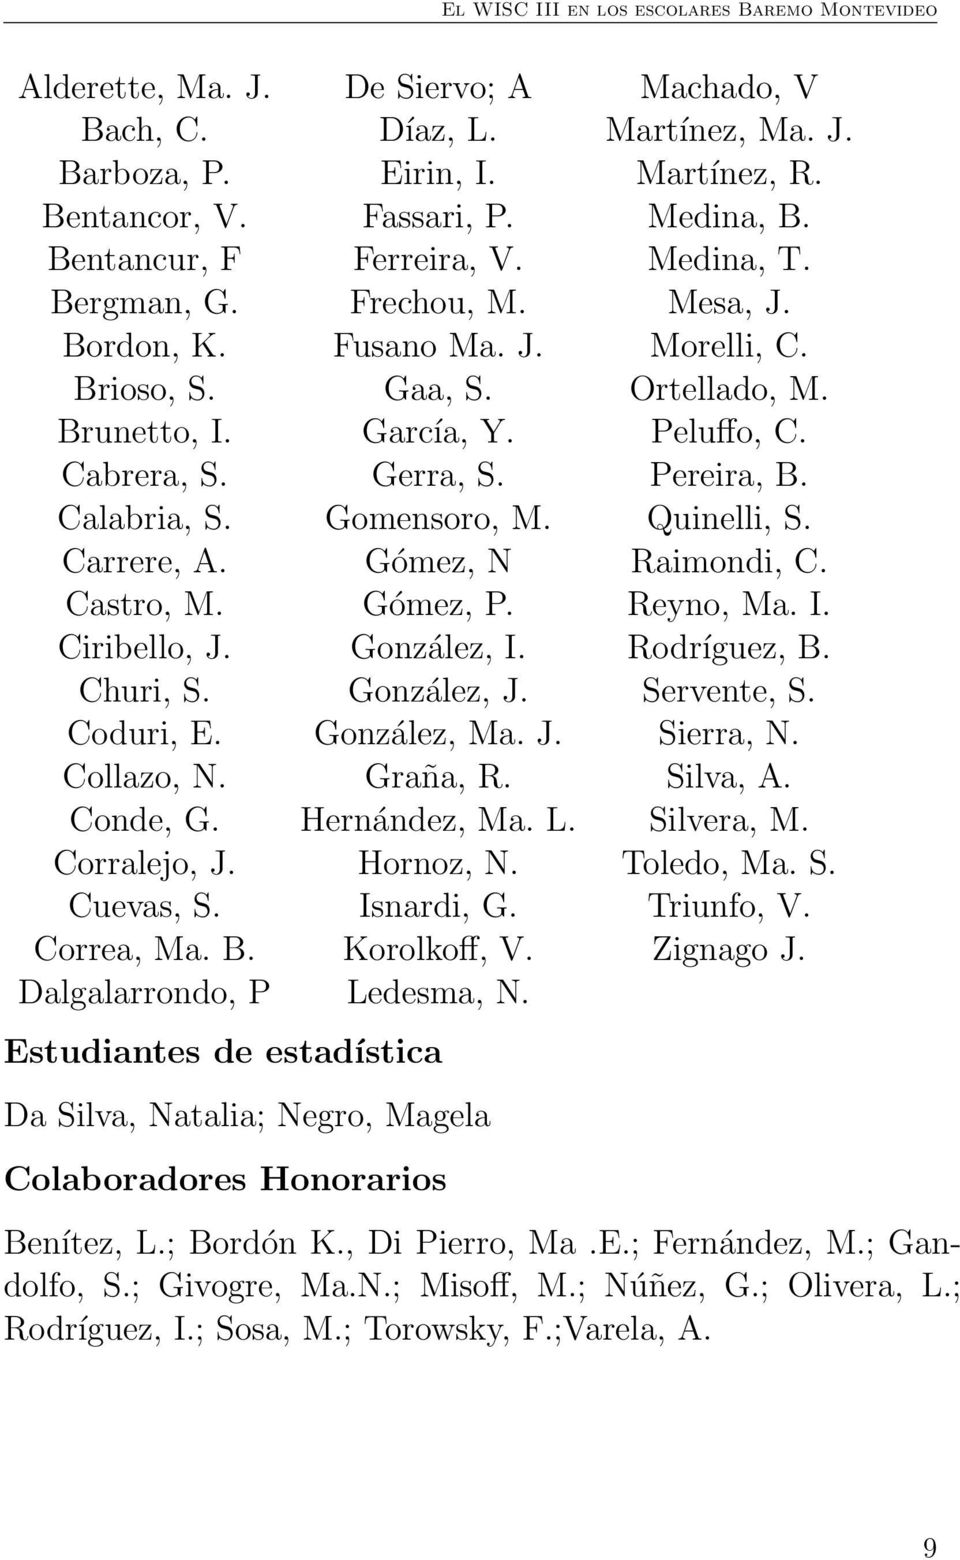 Carrere, A. Gómez, N Raimondi, C. Castro, M. Gómez, P. Reyno, Ma. I. Ciribello, J. González, I. Rodríguez, B. Churi, S. González, J. Servente, S. Coduri, E. González, Ma. J. Sierra, N. Collazo, N.